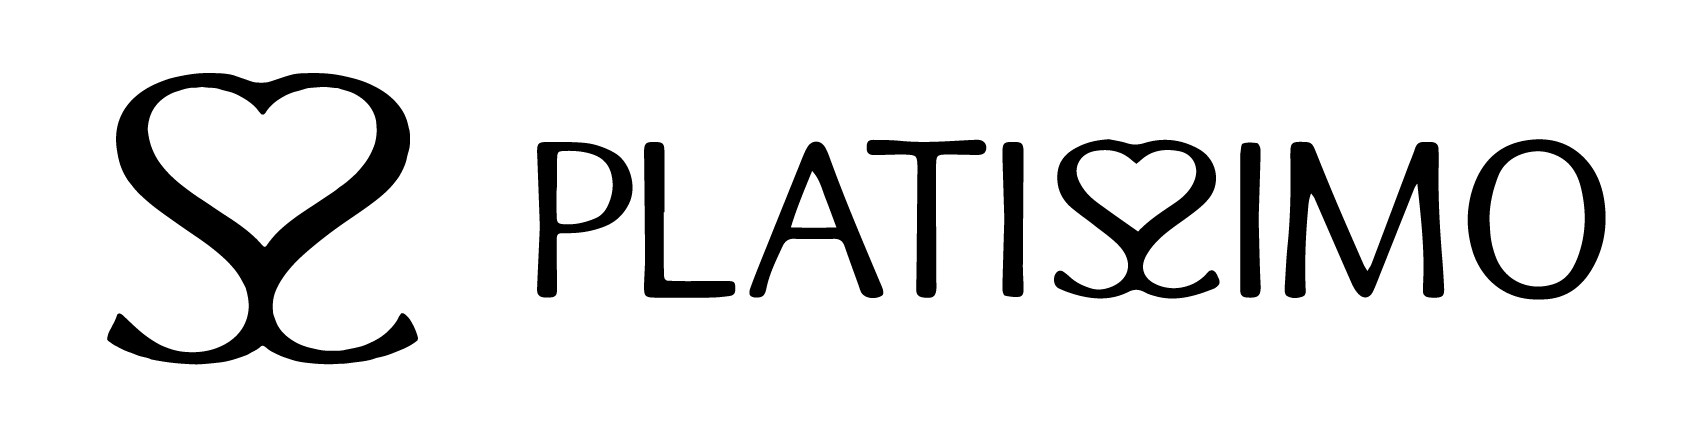 Logo Platissimo